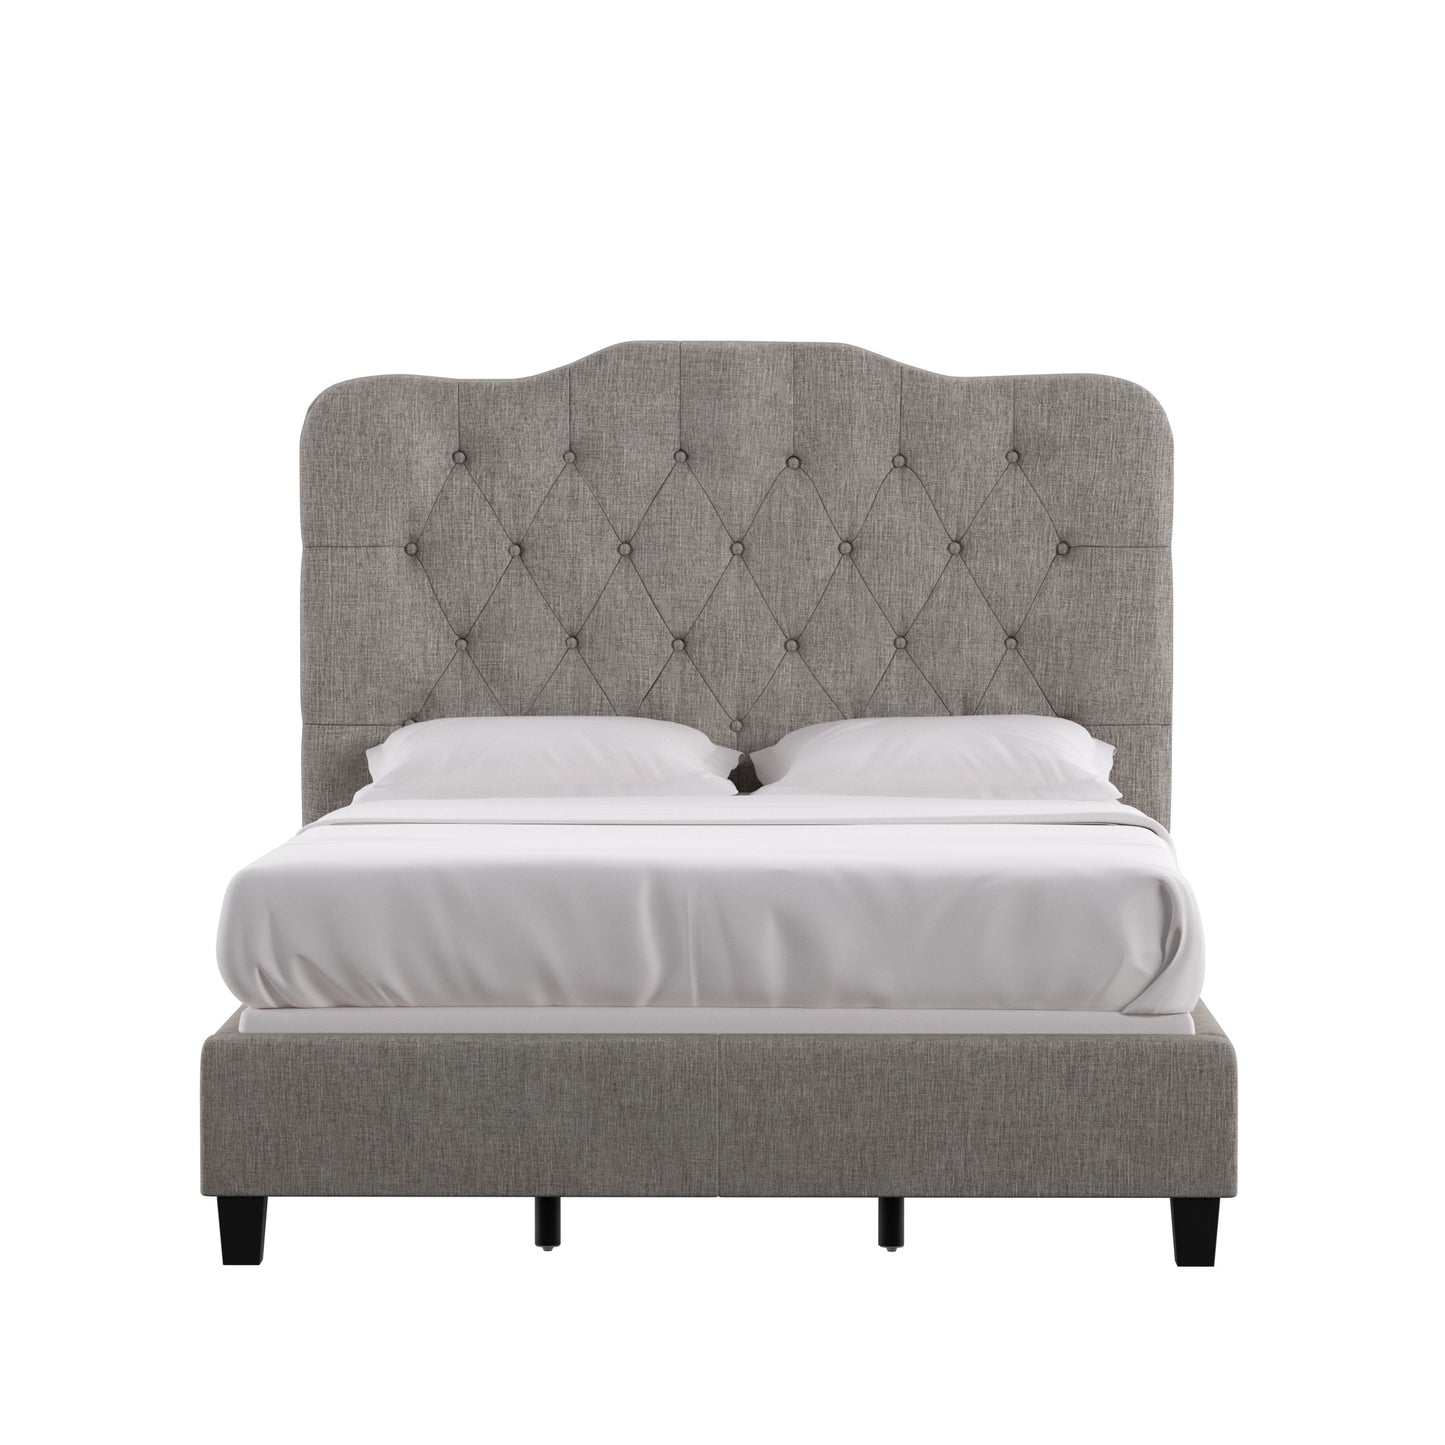 Adjustable Diamond Tufted Camelback Bed - Grey, Full